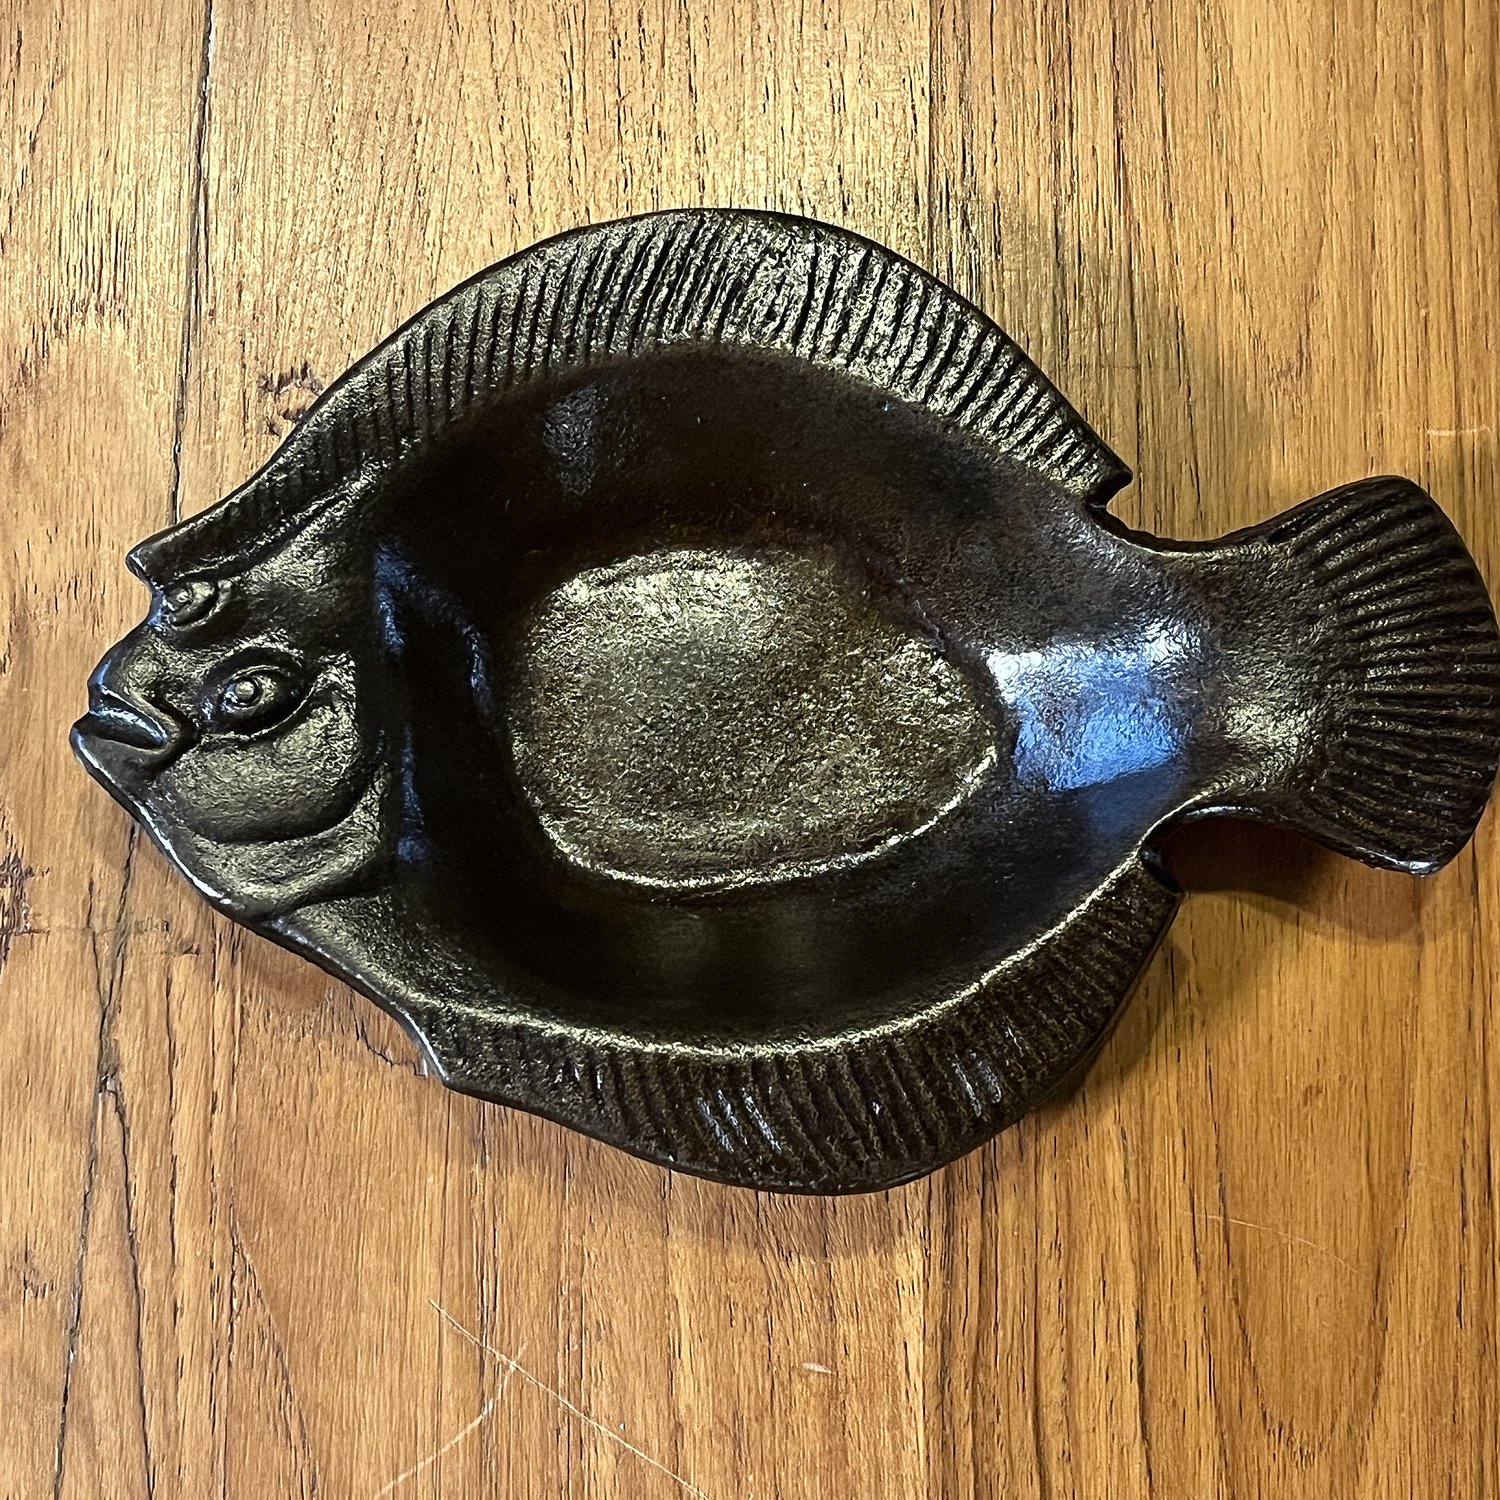 Vintage Japan Cast Iron Fish Shape Pan Dish Tray Set of 3